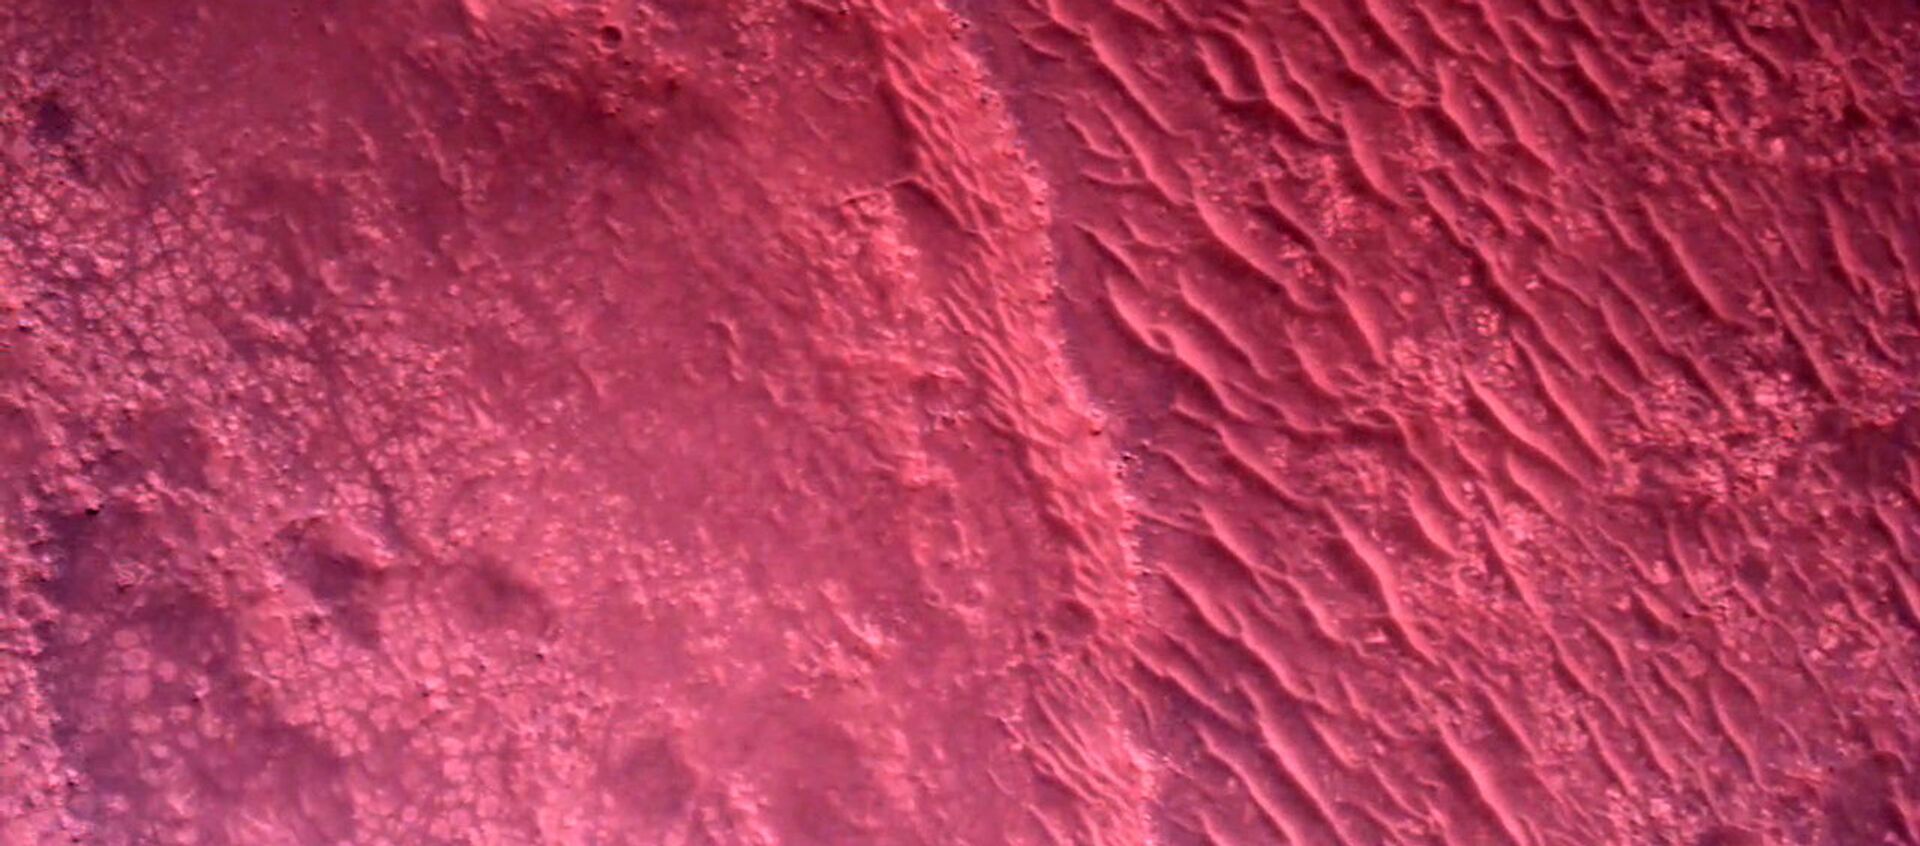 Поверхность Марса - 俄罗斯卫星通讯社, 1920, 25.02.2021